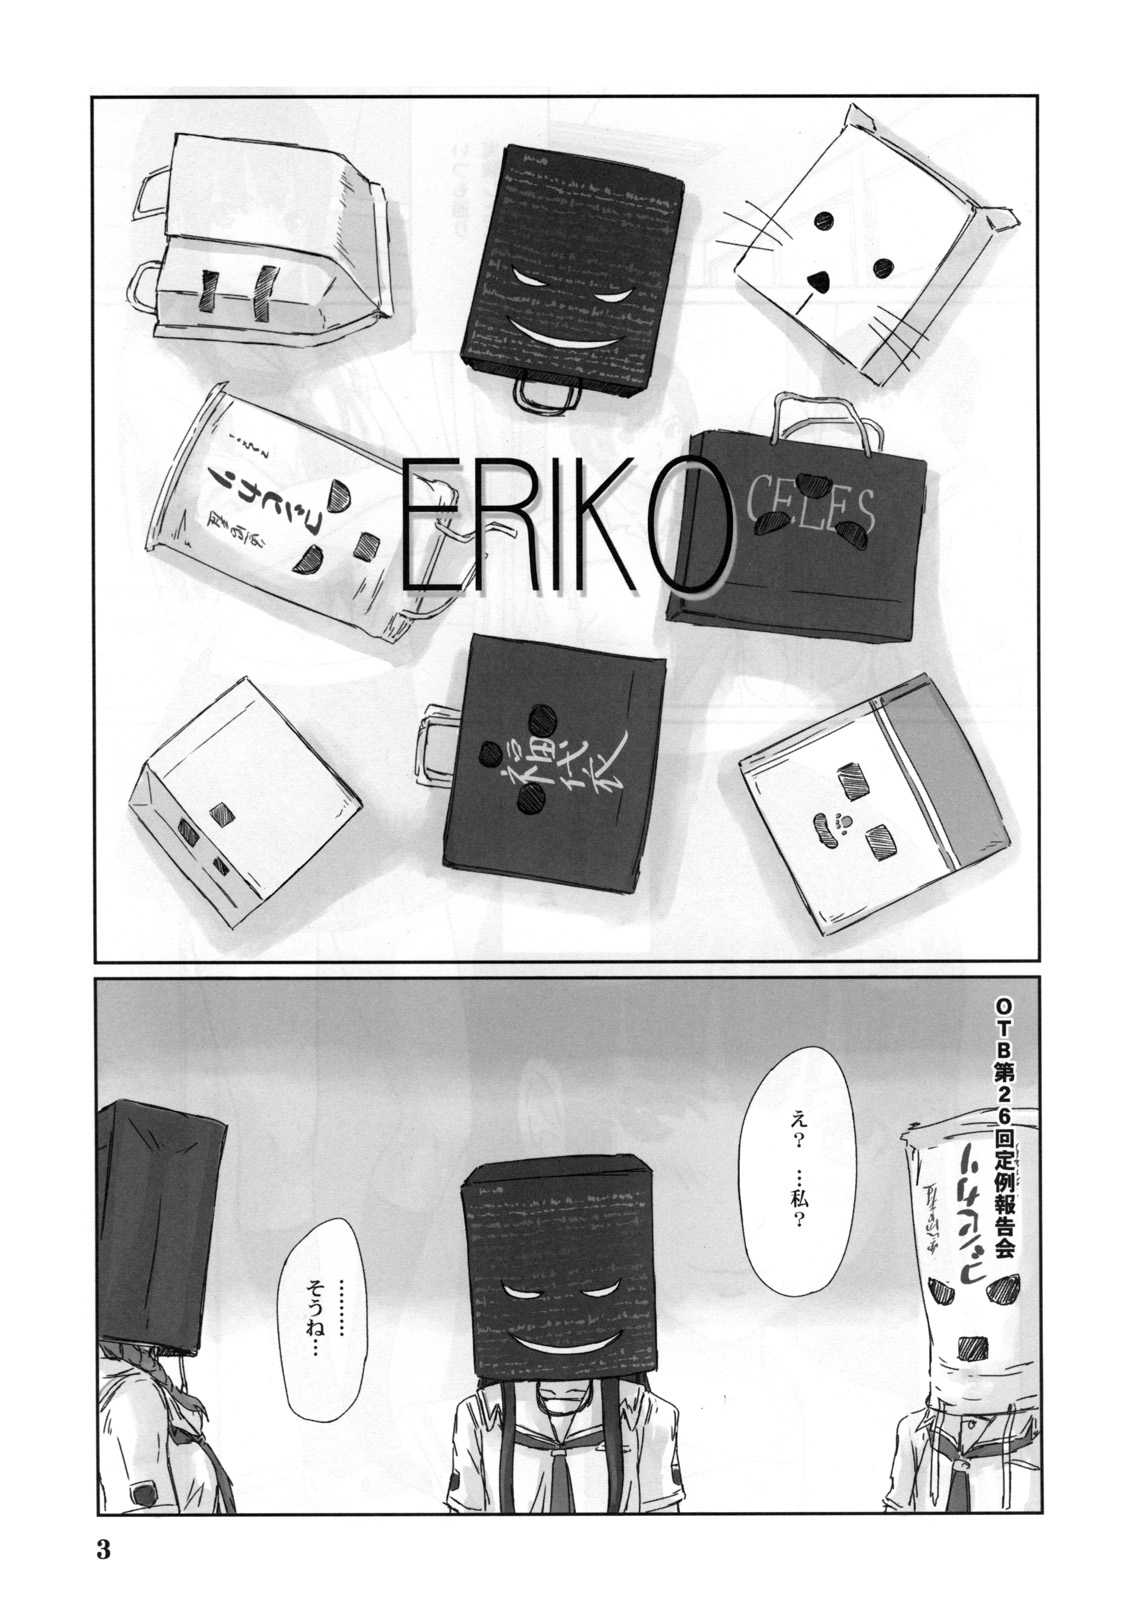 [G&#039;s studio] ERIKO (kimikiss){masterbloodfer} 